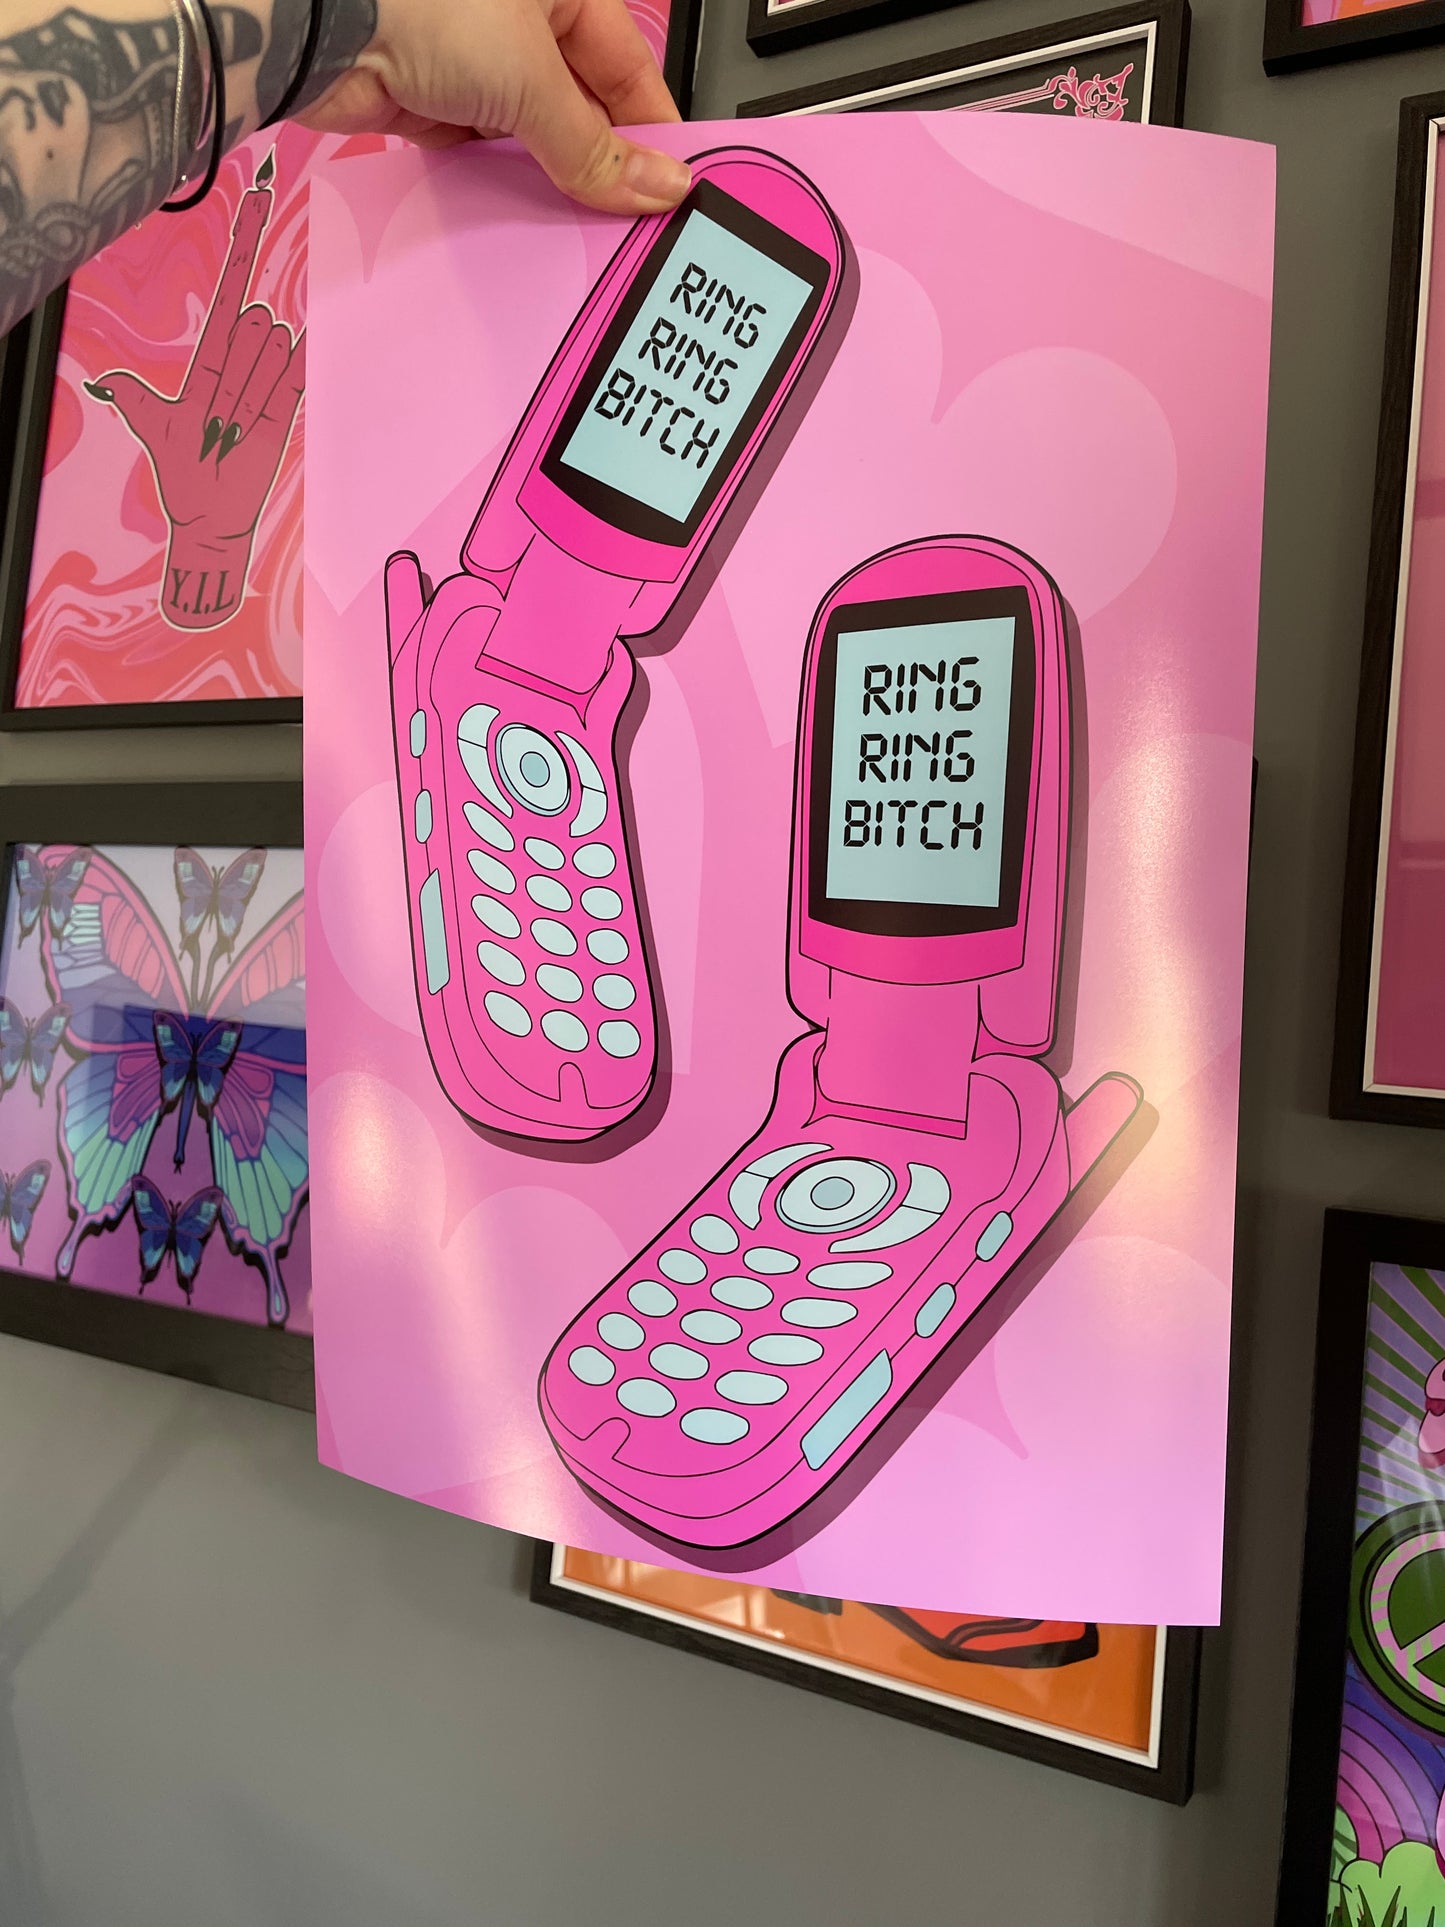 Mobile flip phone 1990's 2000's aesthetic poster print